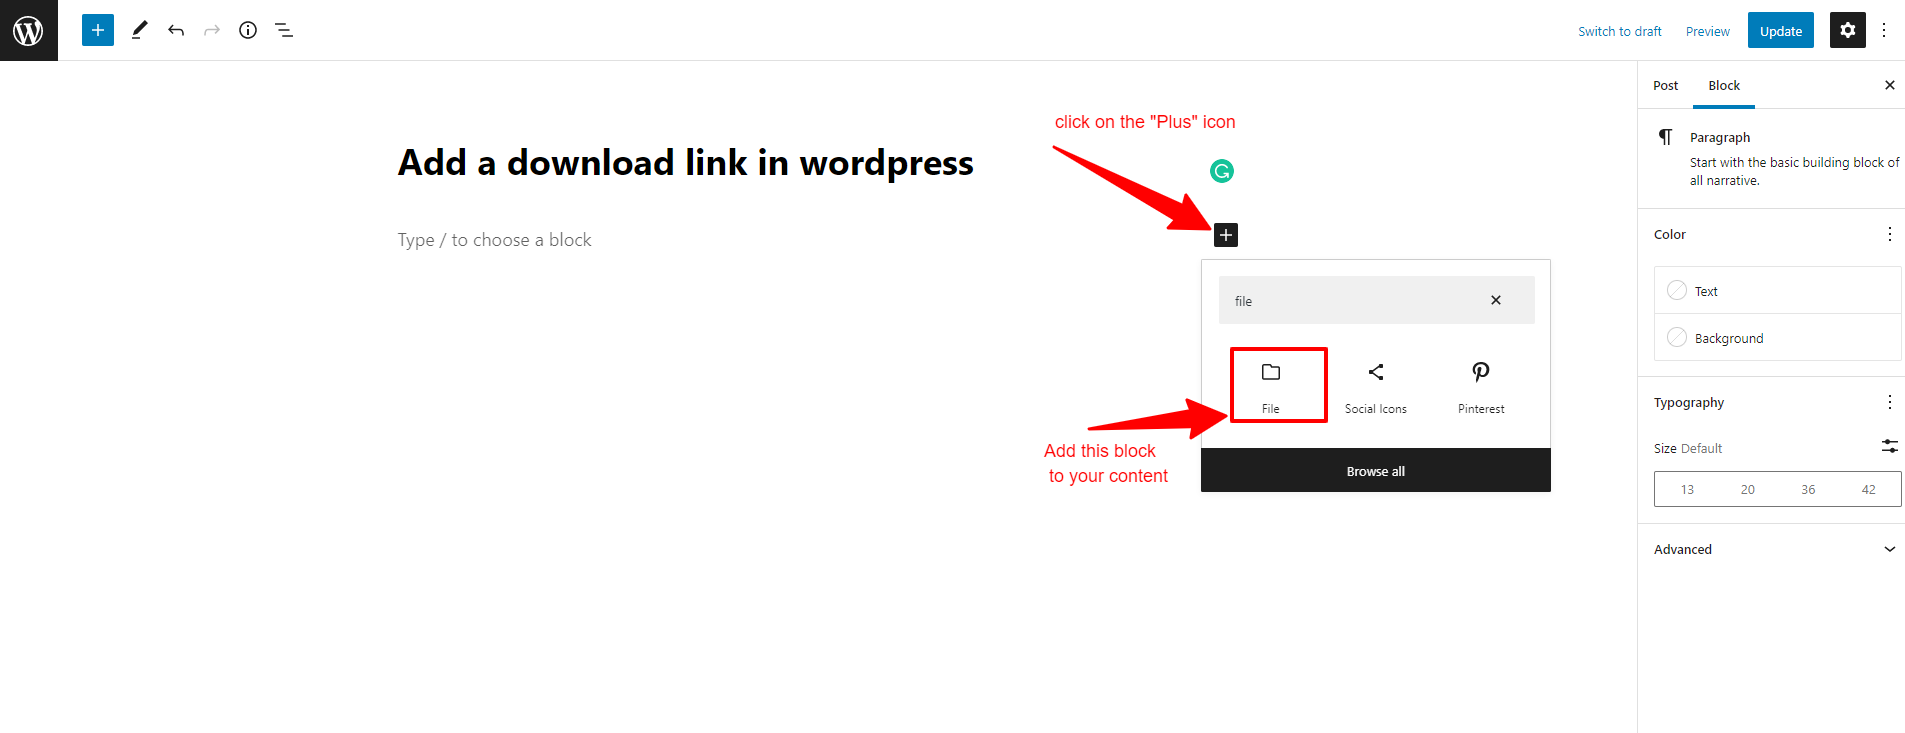 Add A Download Link In Wordpress